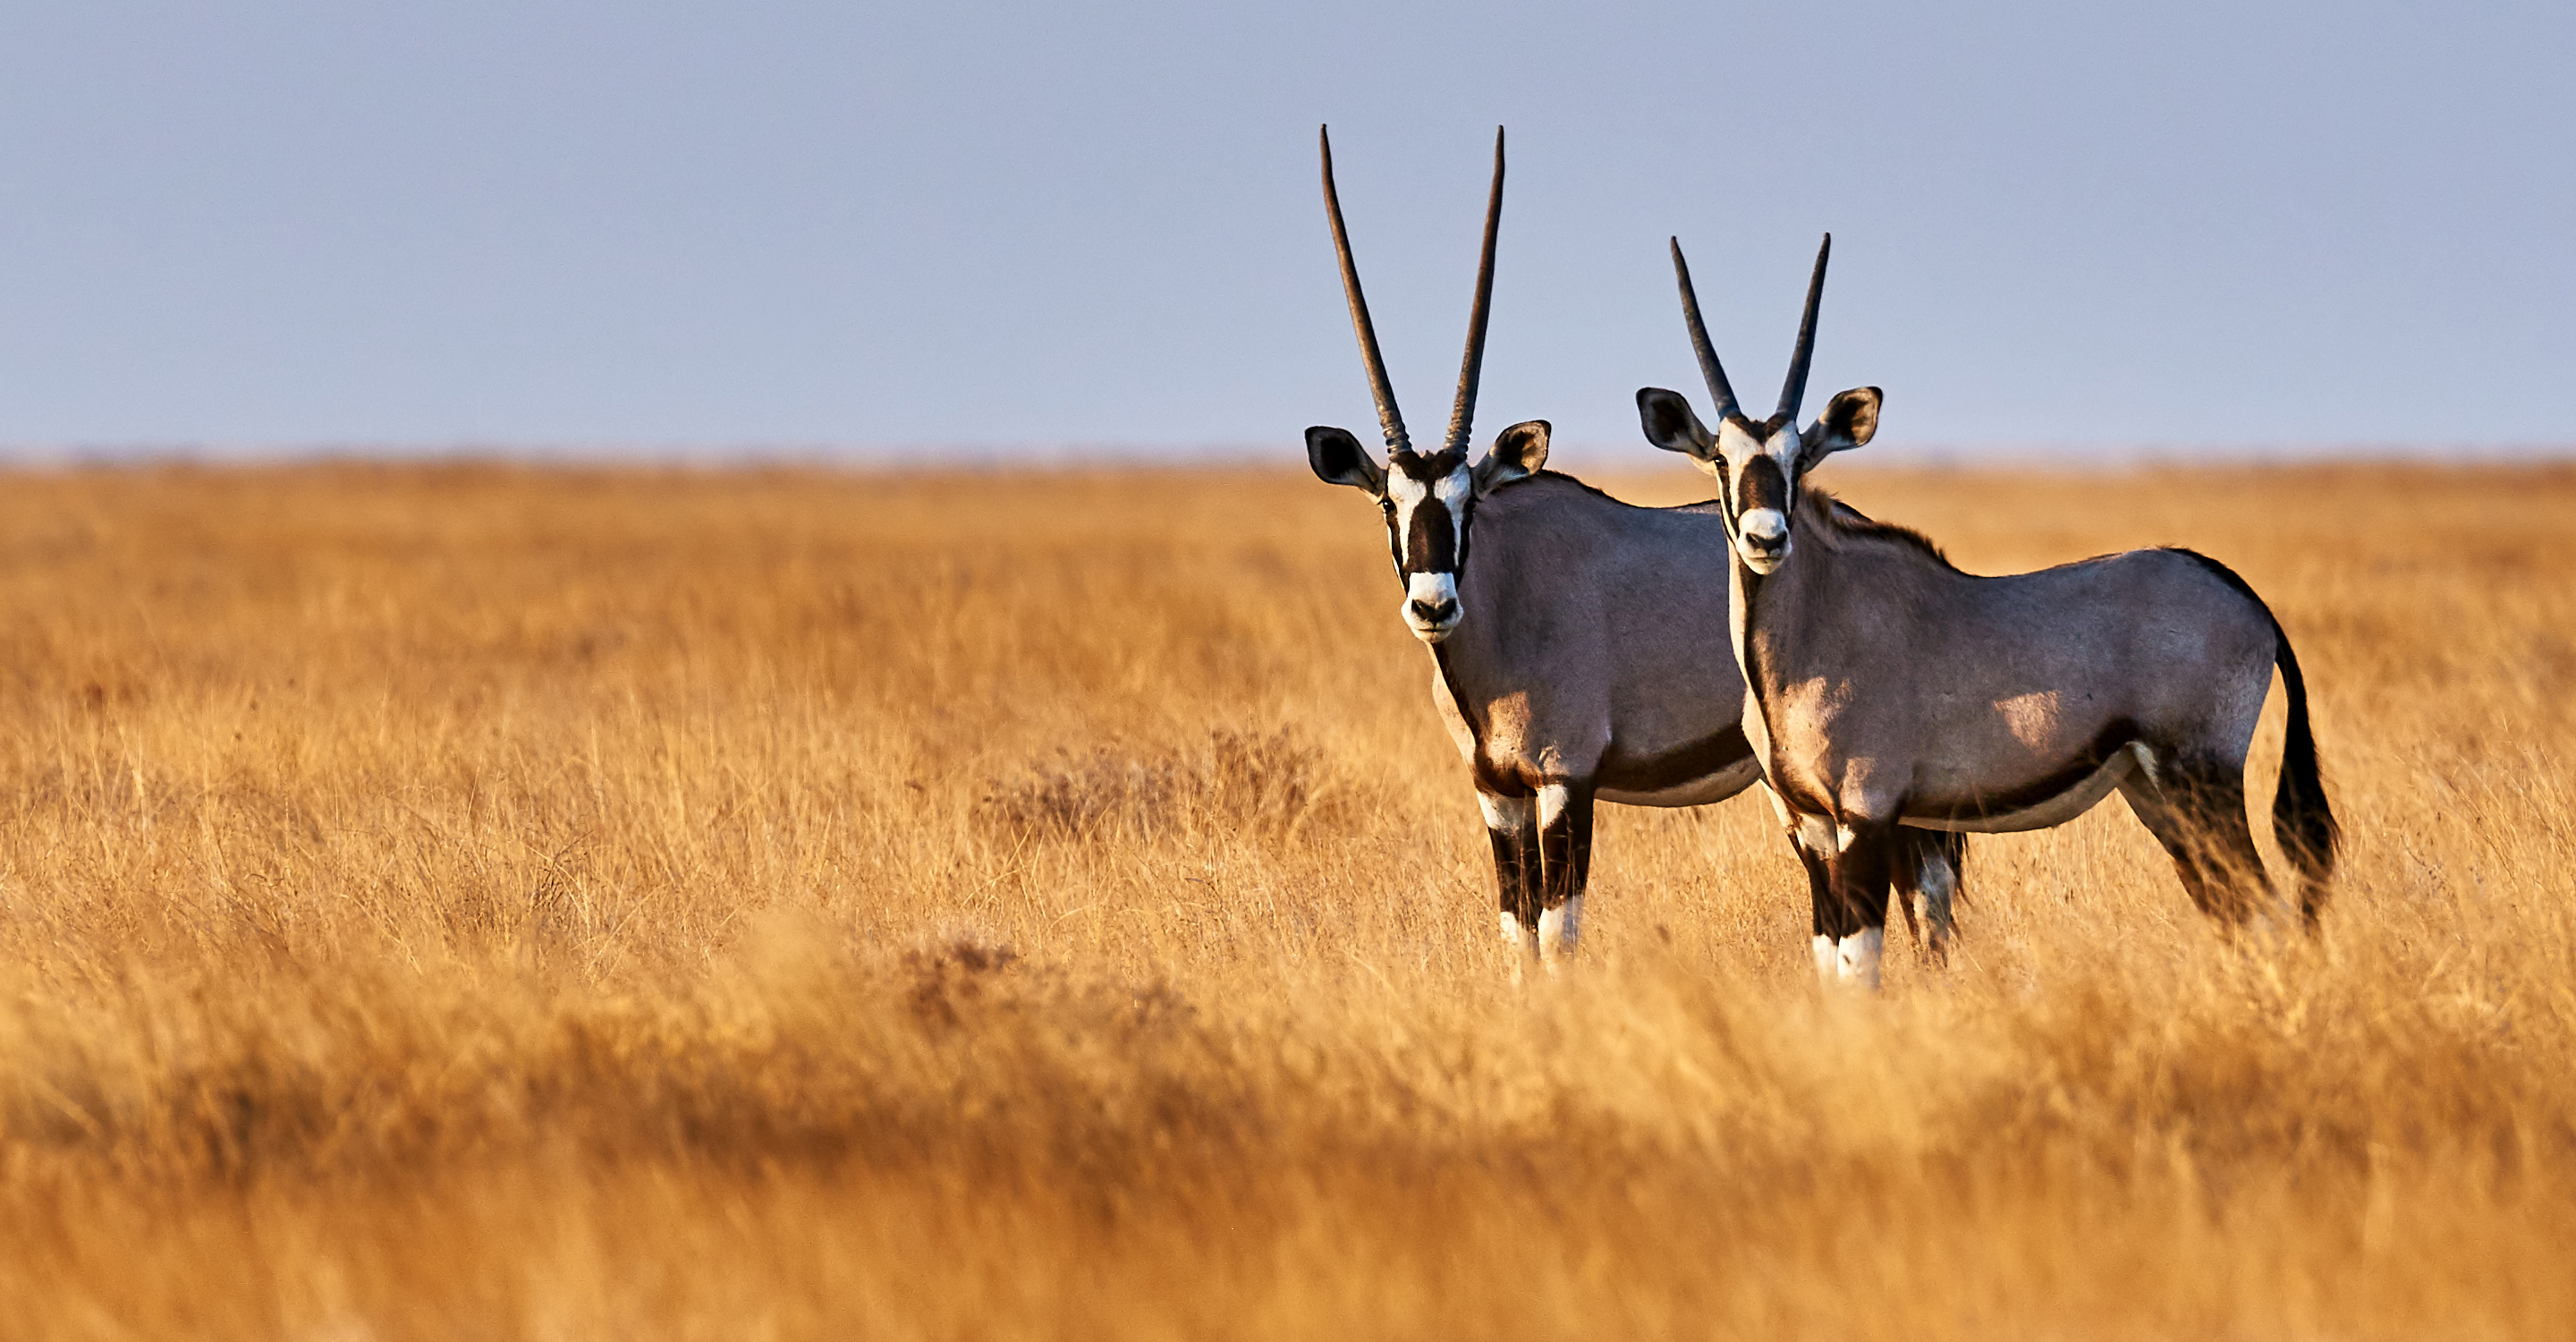 Two oryx in the savannah of Etosha National Park, Namibia